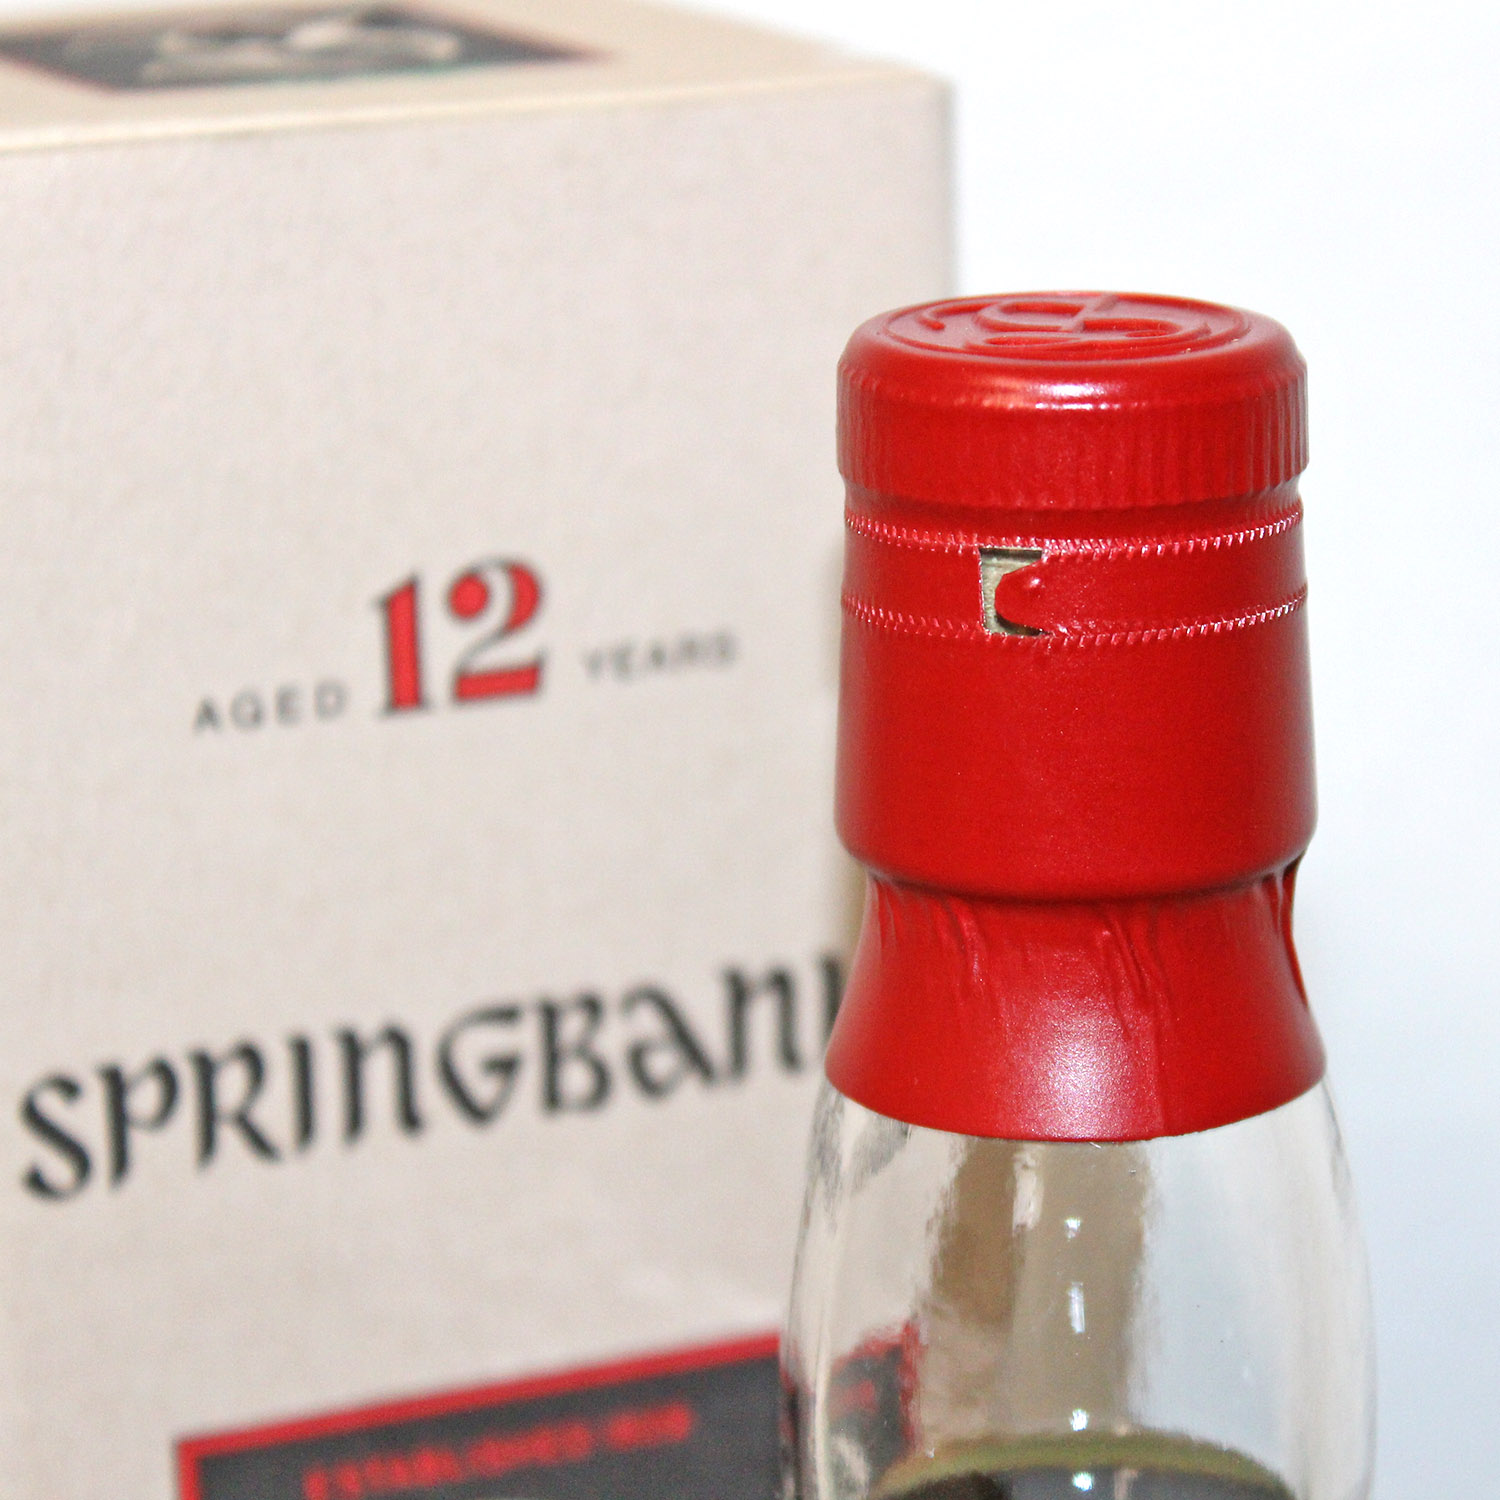 Springbank 12 Years Old 100 Proof capsule